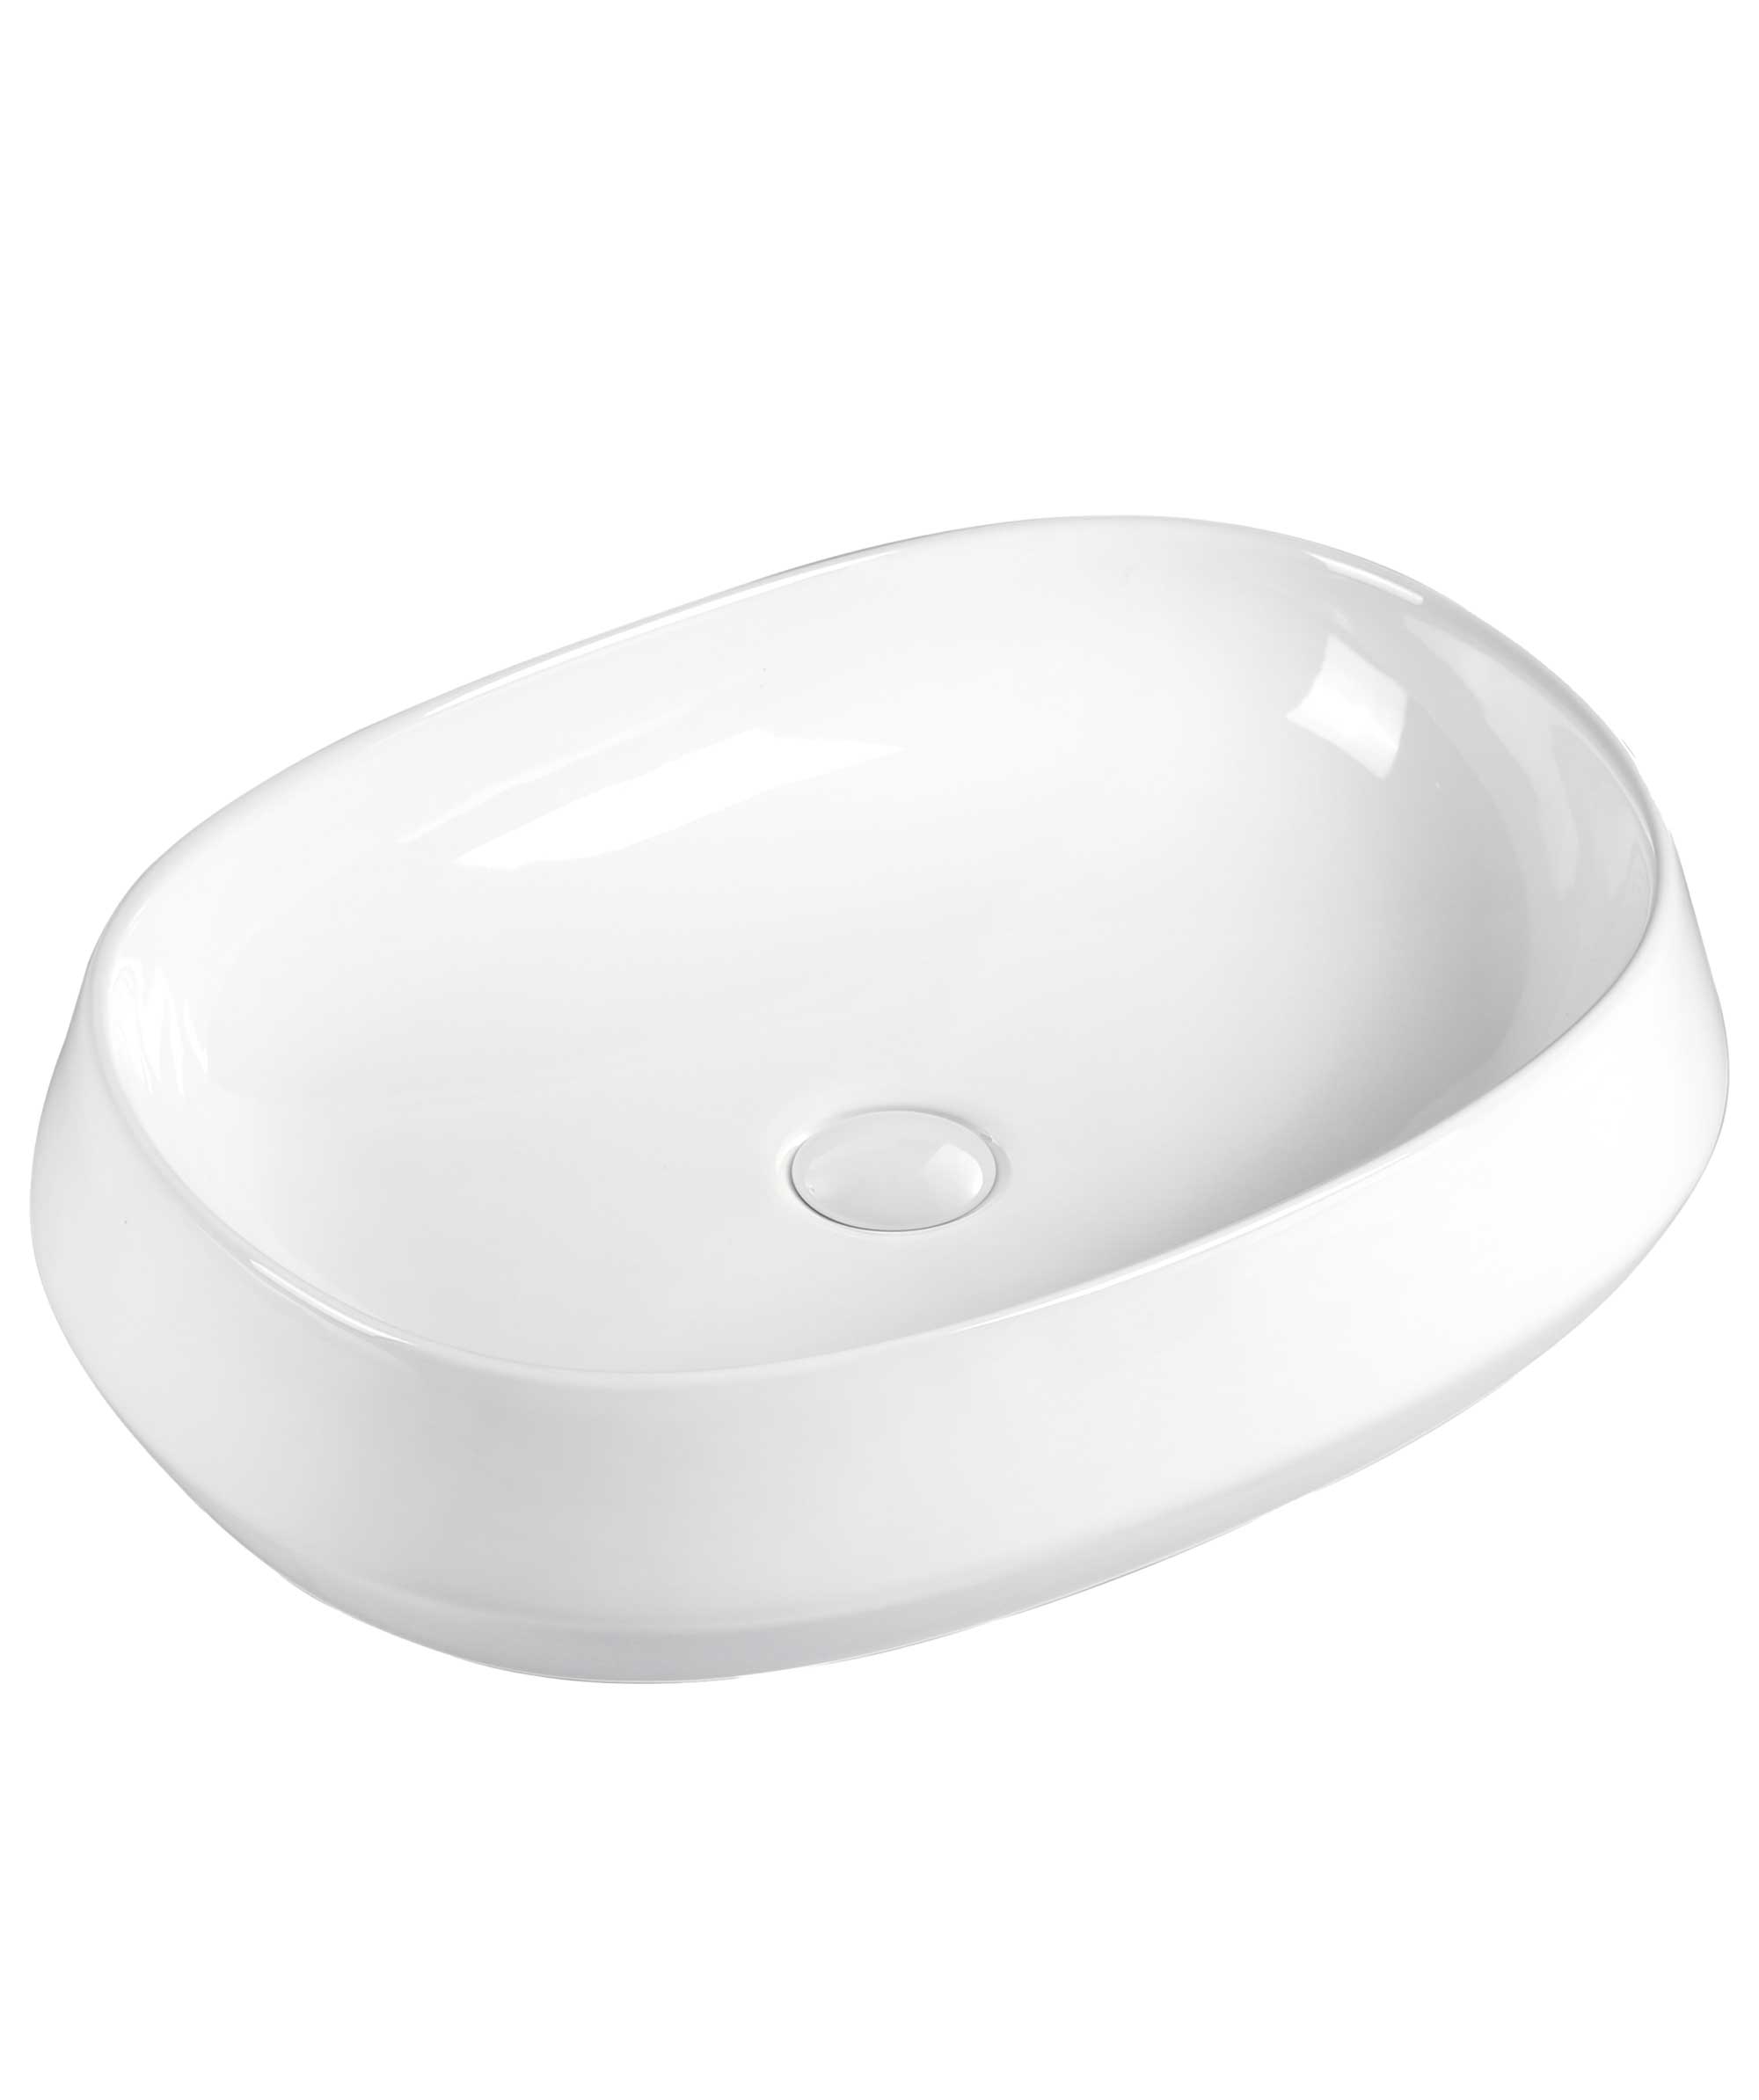 Loni 540 Ceramic Basin - White Gloss